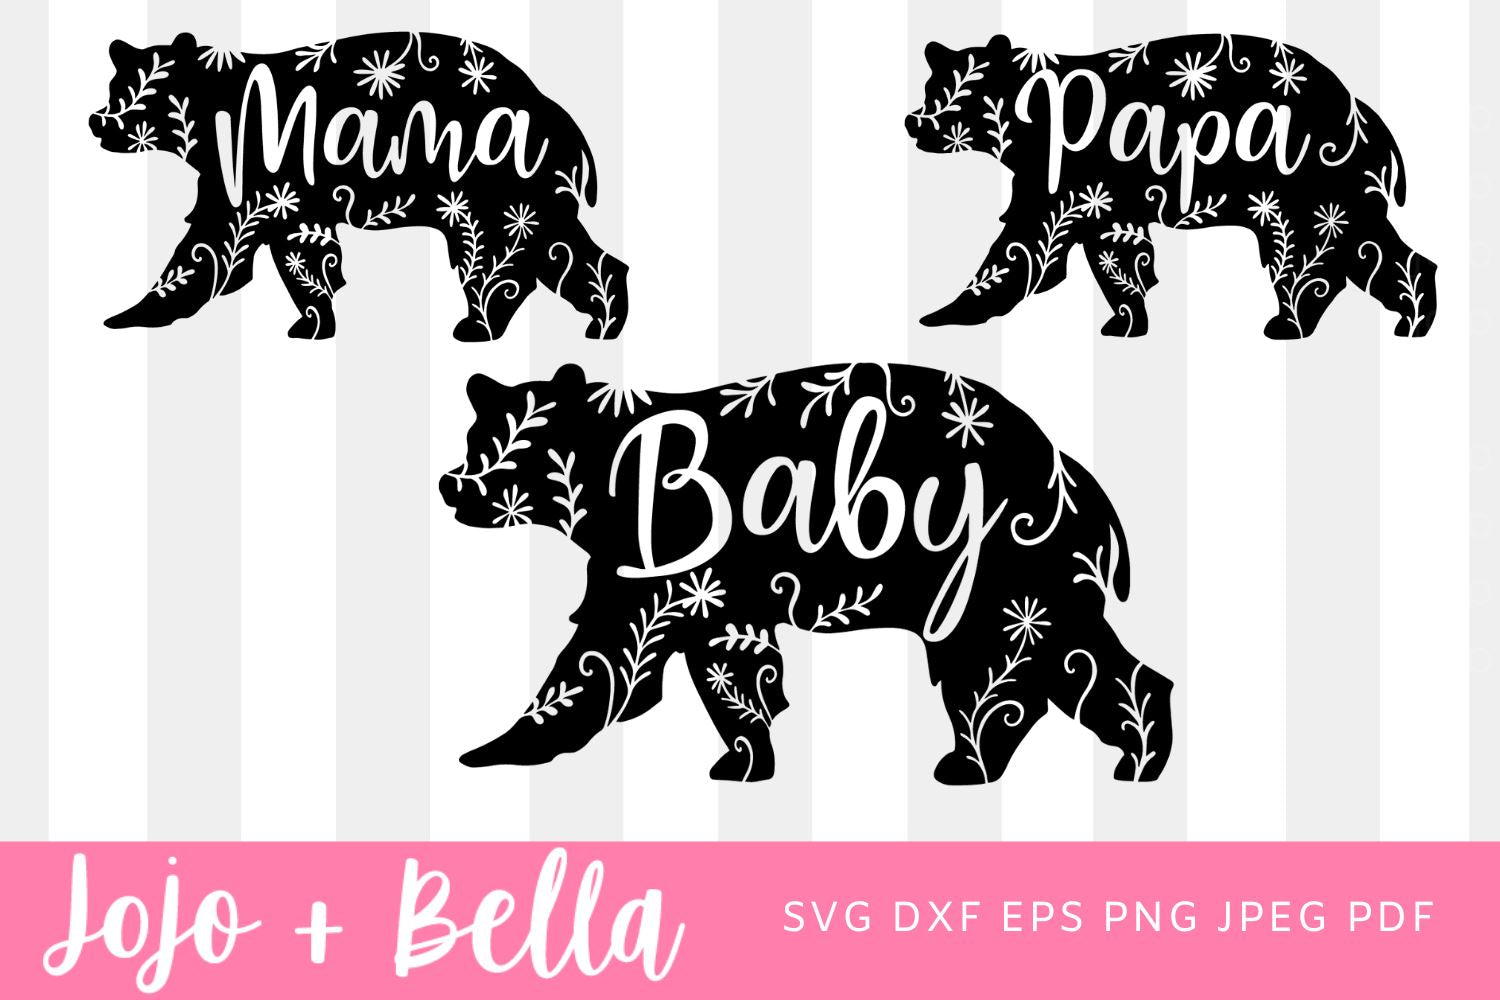 Mama bear and baby bear Svg cut file for cricut